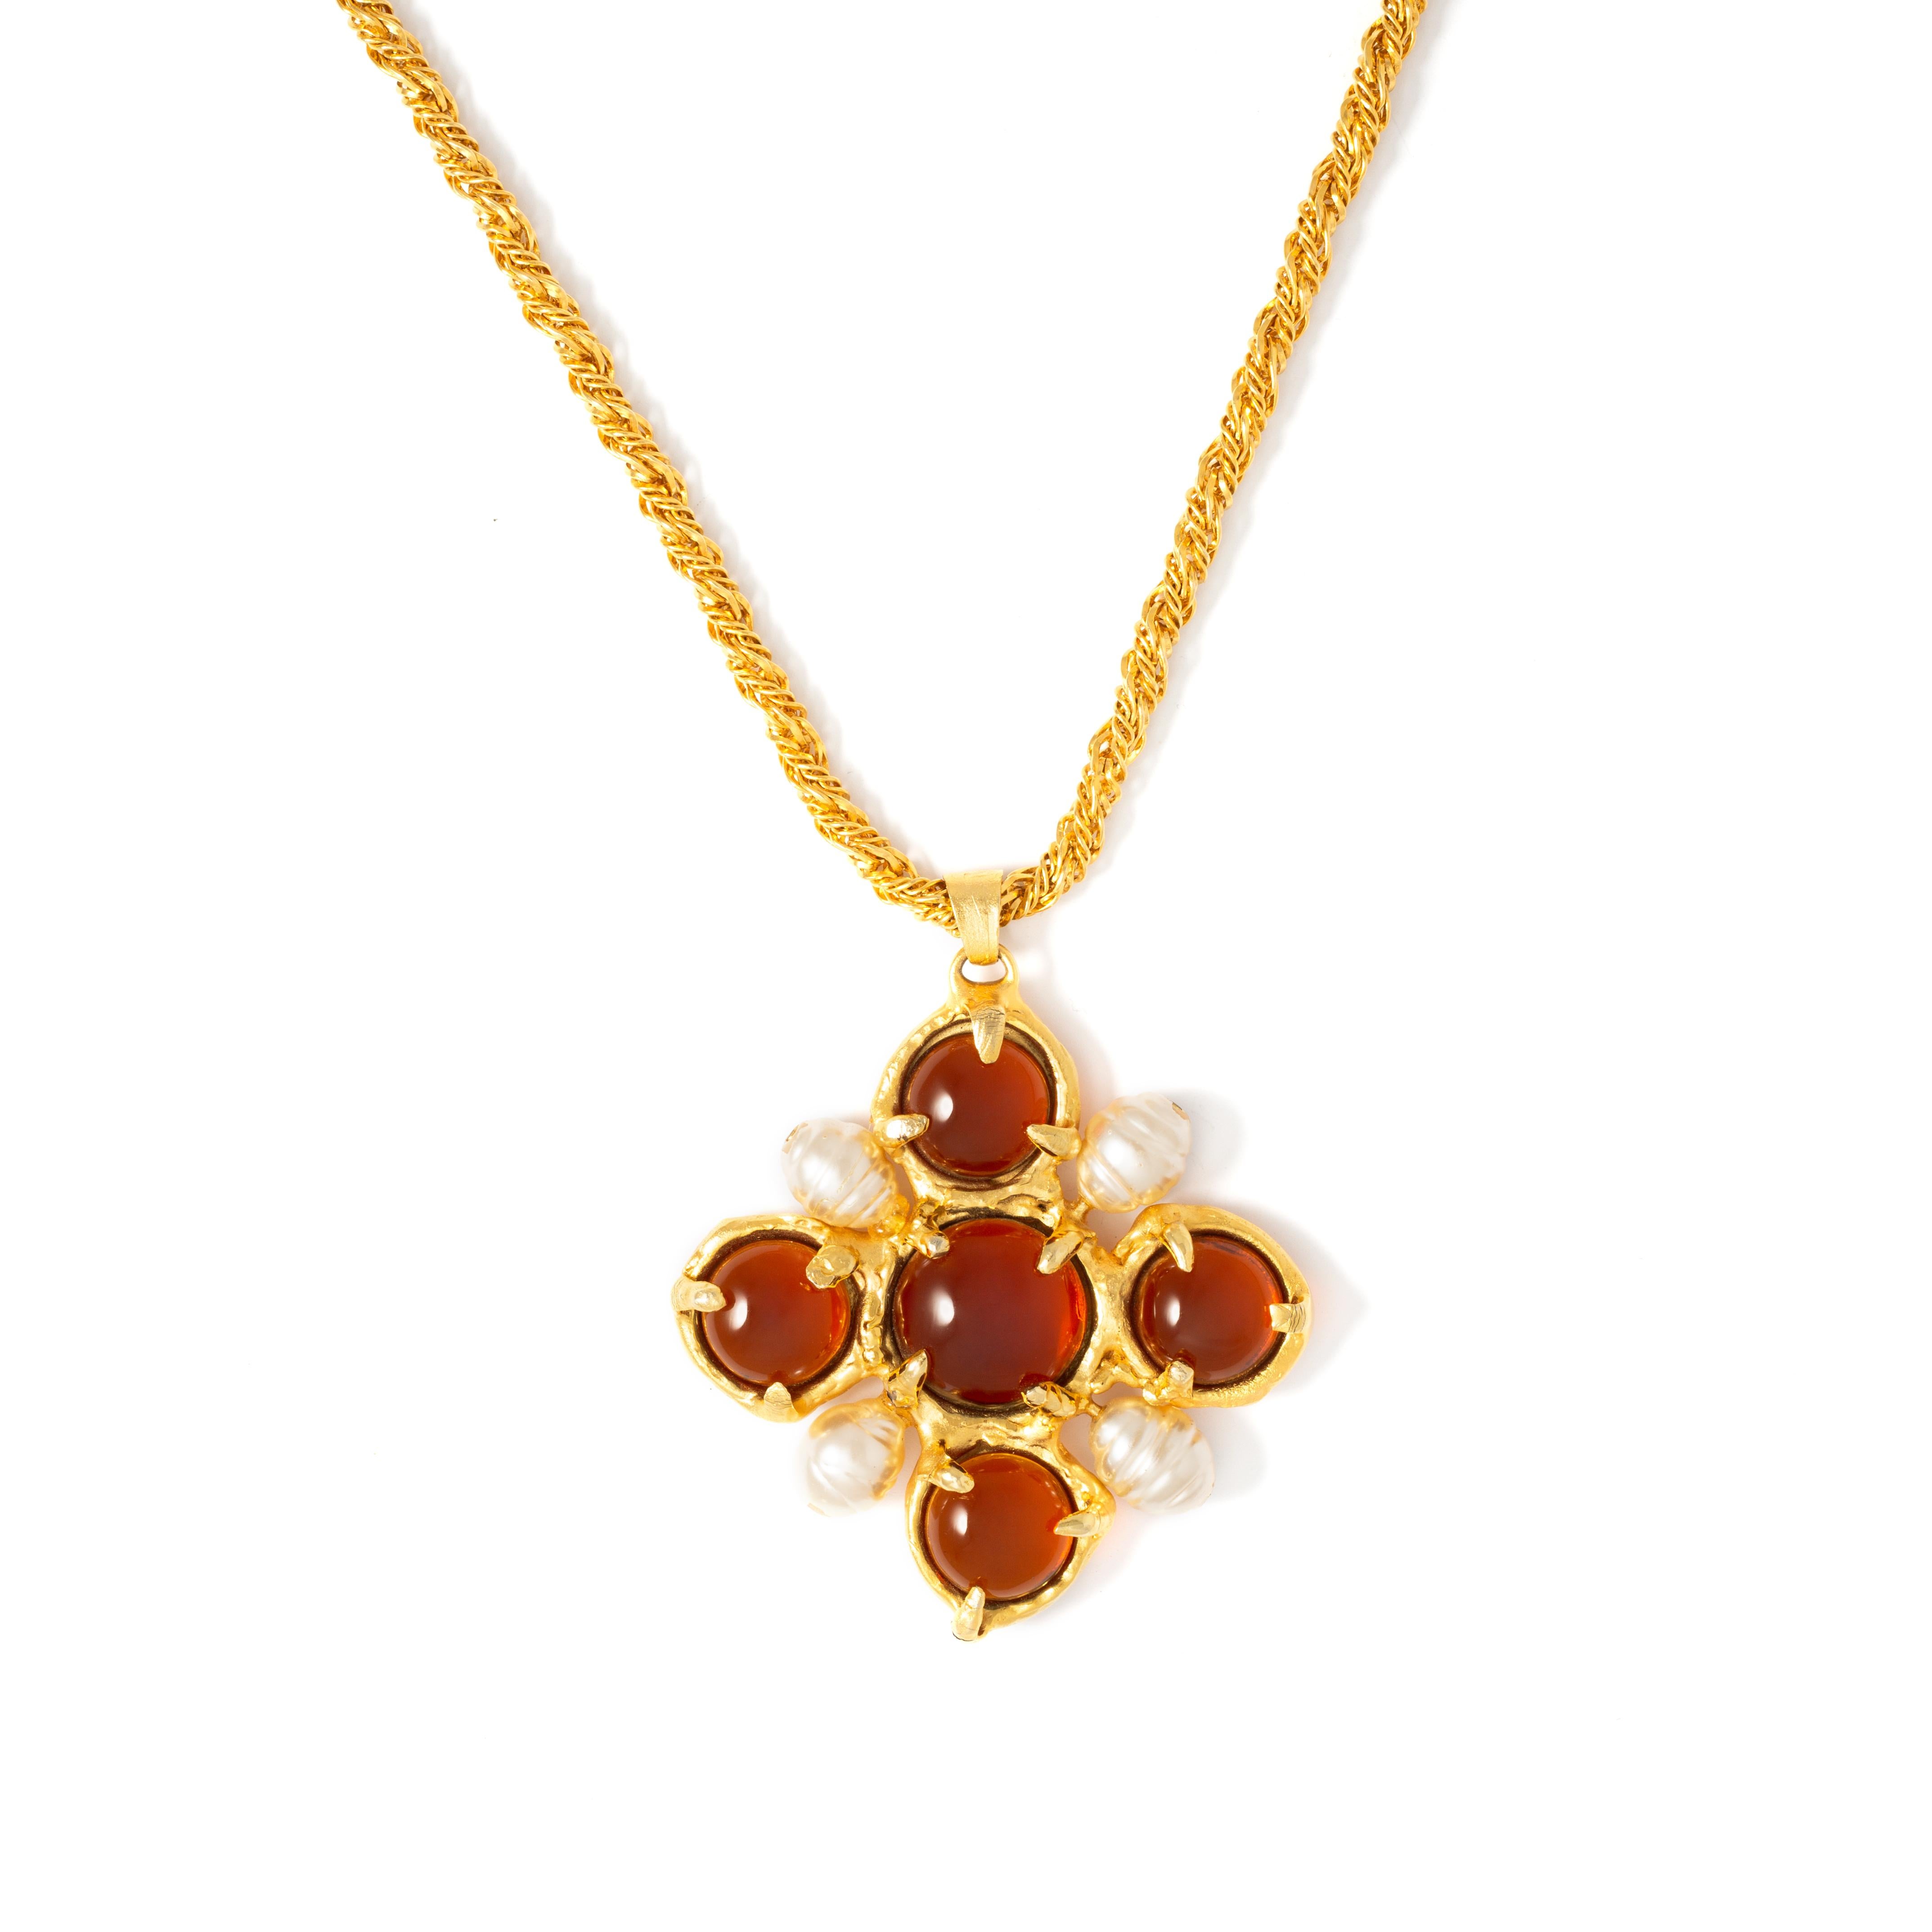 Cross Pendant Necklace. Faux pearl and orange cabochon stones.

Weight. 123.61 grams
Lenght Pendentif: 8.20 cm
Width Pendentif: 7 cm
Lenght Chaine: 103 cm